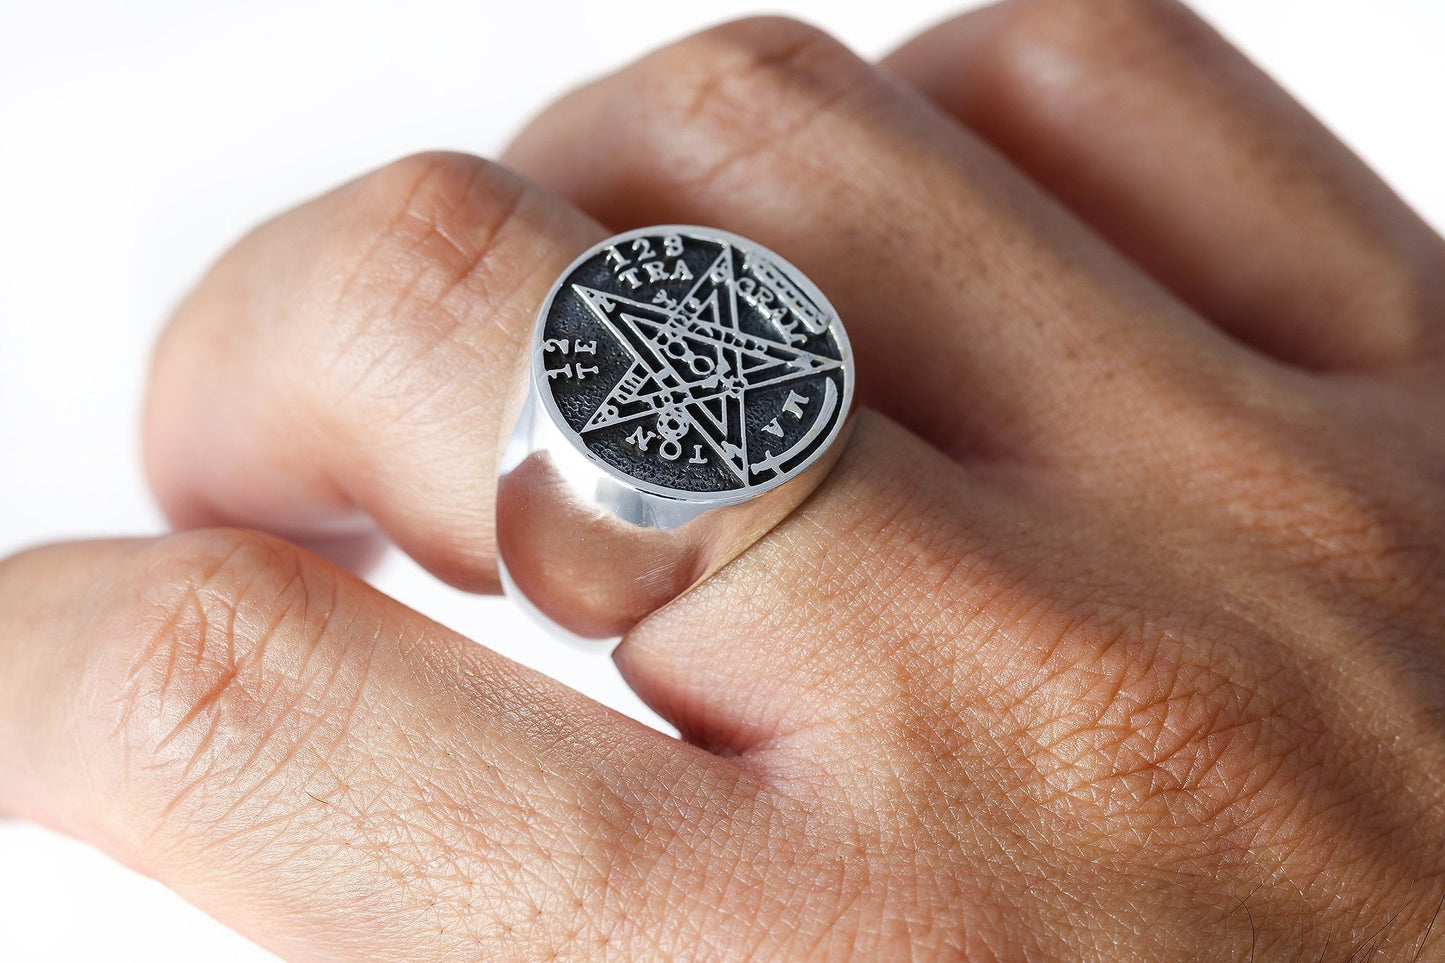 925 Sterling Silver Tetragrammaton Seal of Solomon Ring - SilverMania925